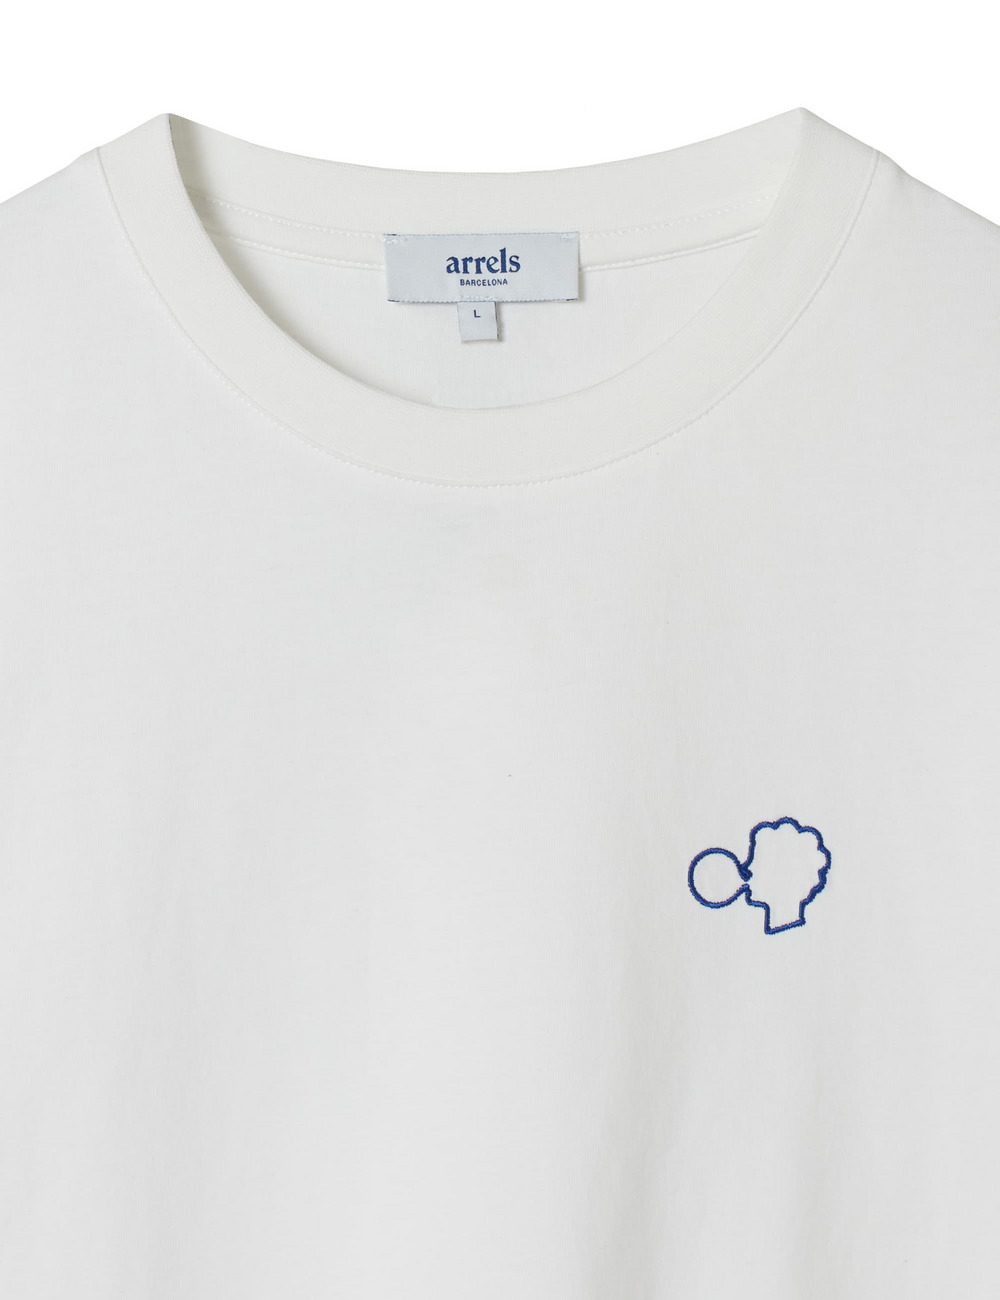 【MEN】Arrels Barcelona バックプリントTシャツ 詳細画像 ホワイト 3